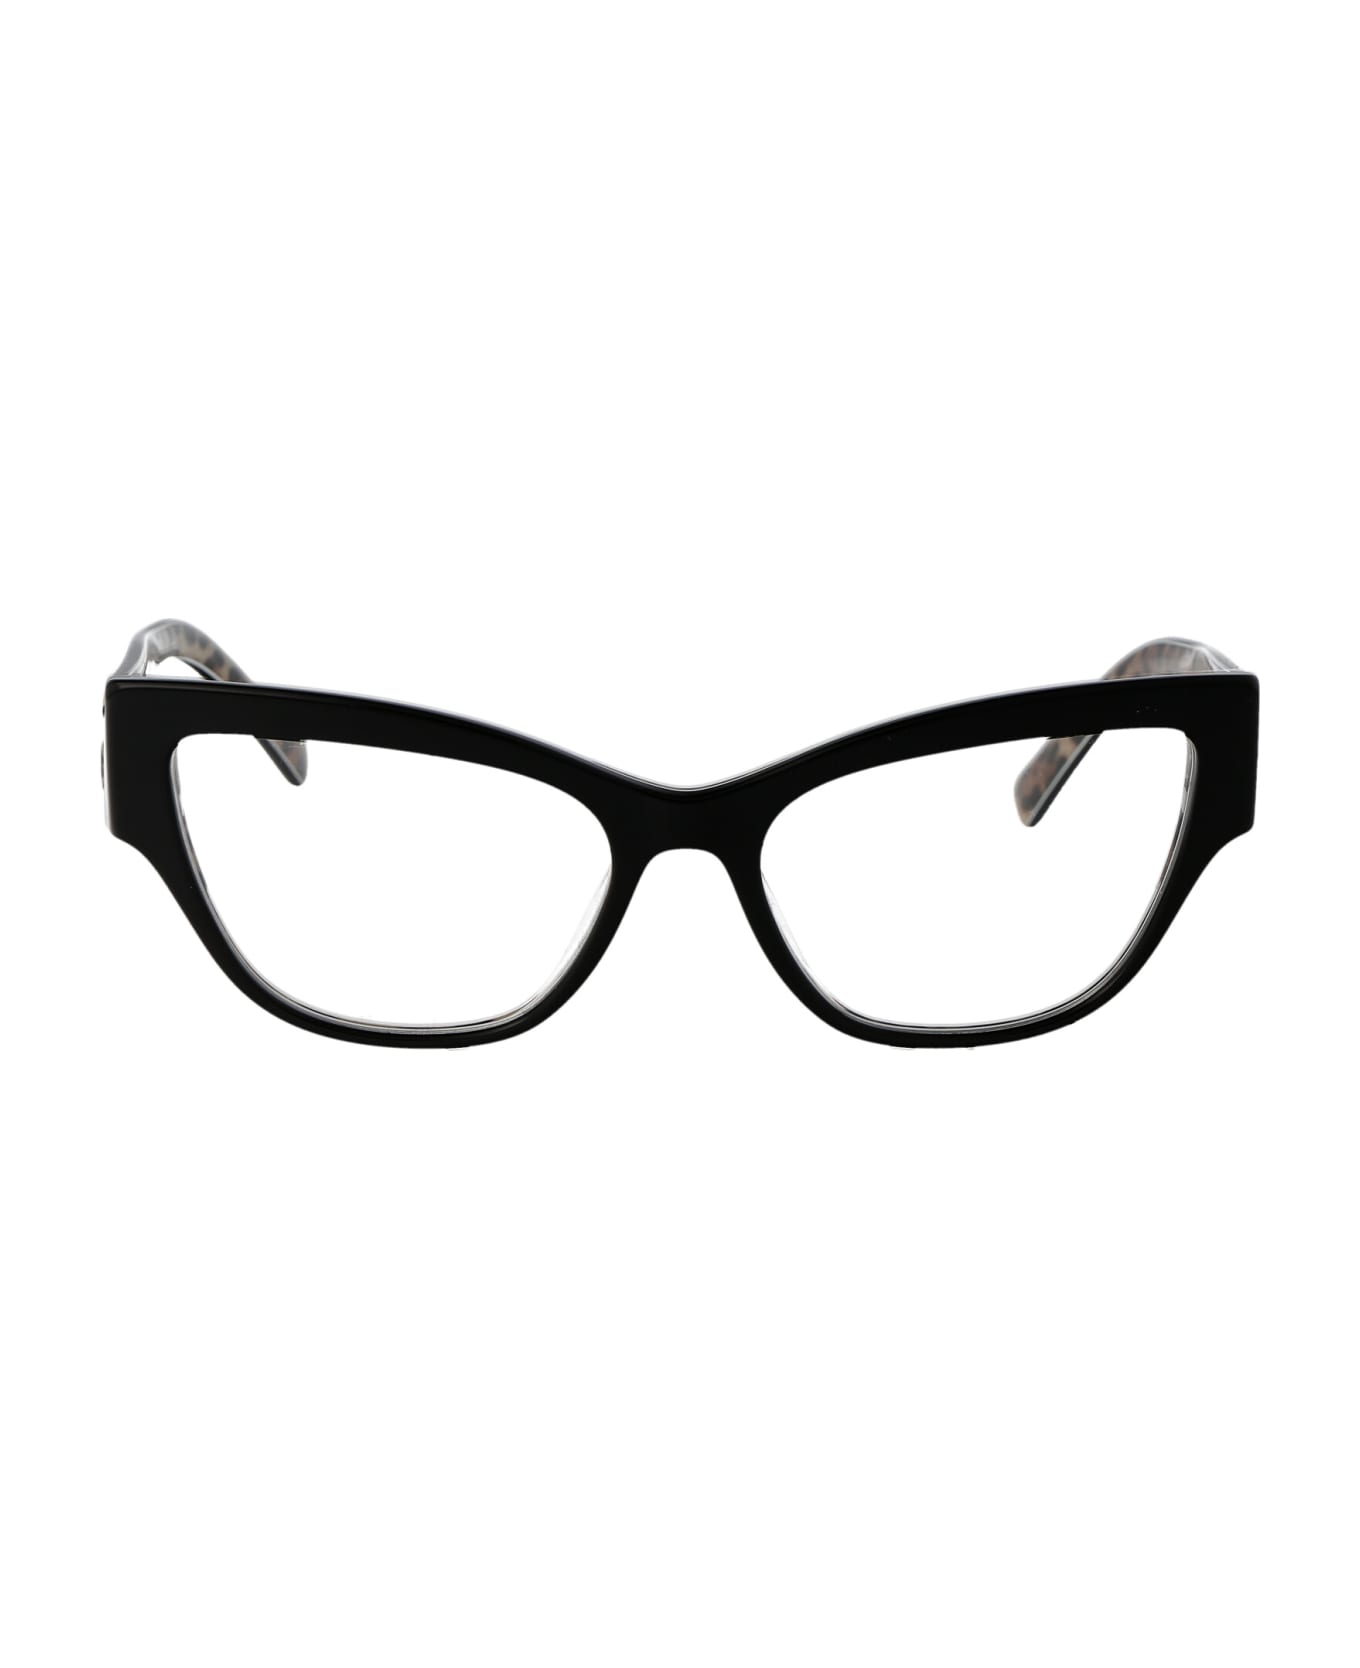 Dolce & Gabbana Eyewear 0dg3378 Glasses - 3299 Black On Leo Brown アイウェア